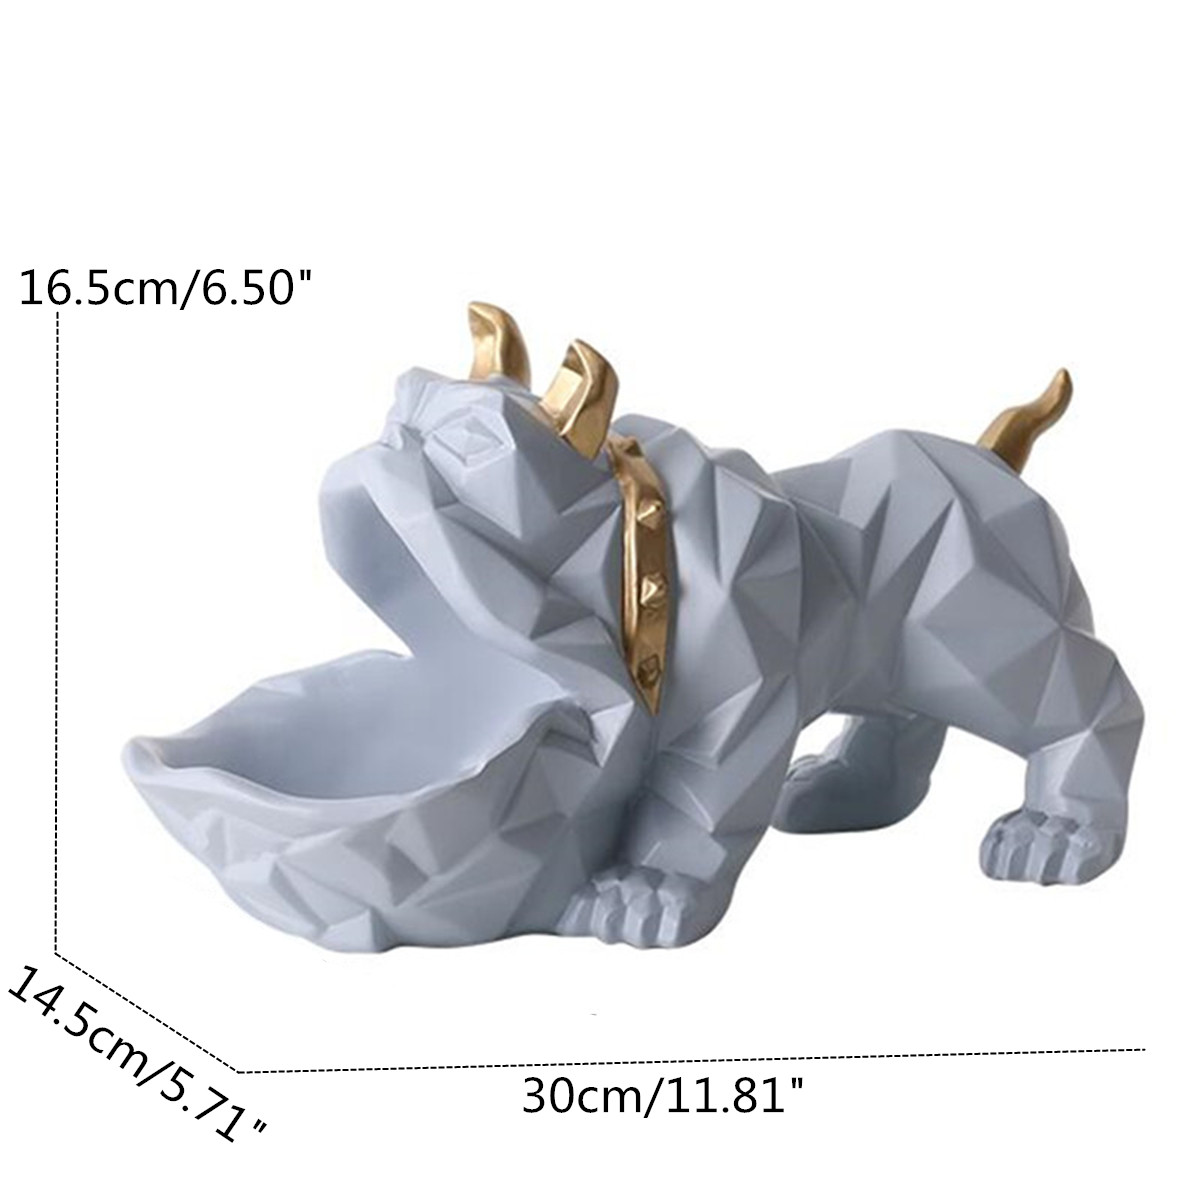 Bulldog-Animal-Sculpture-Puppy-Dog-Statue-Figure-Ornament-Gift-Decorations-1464229-8